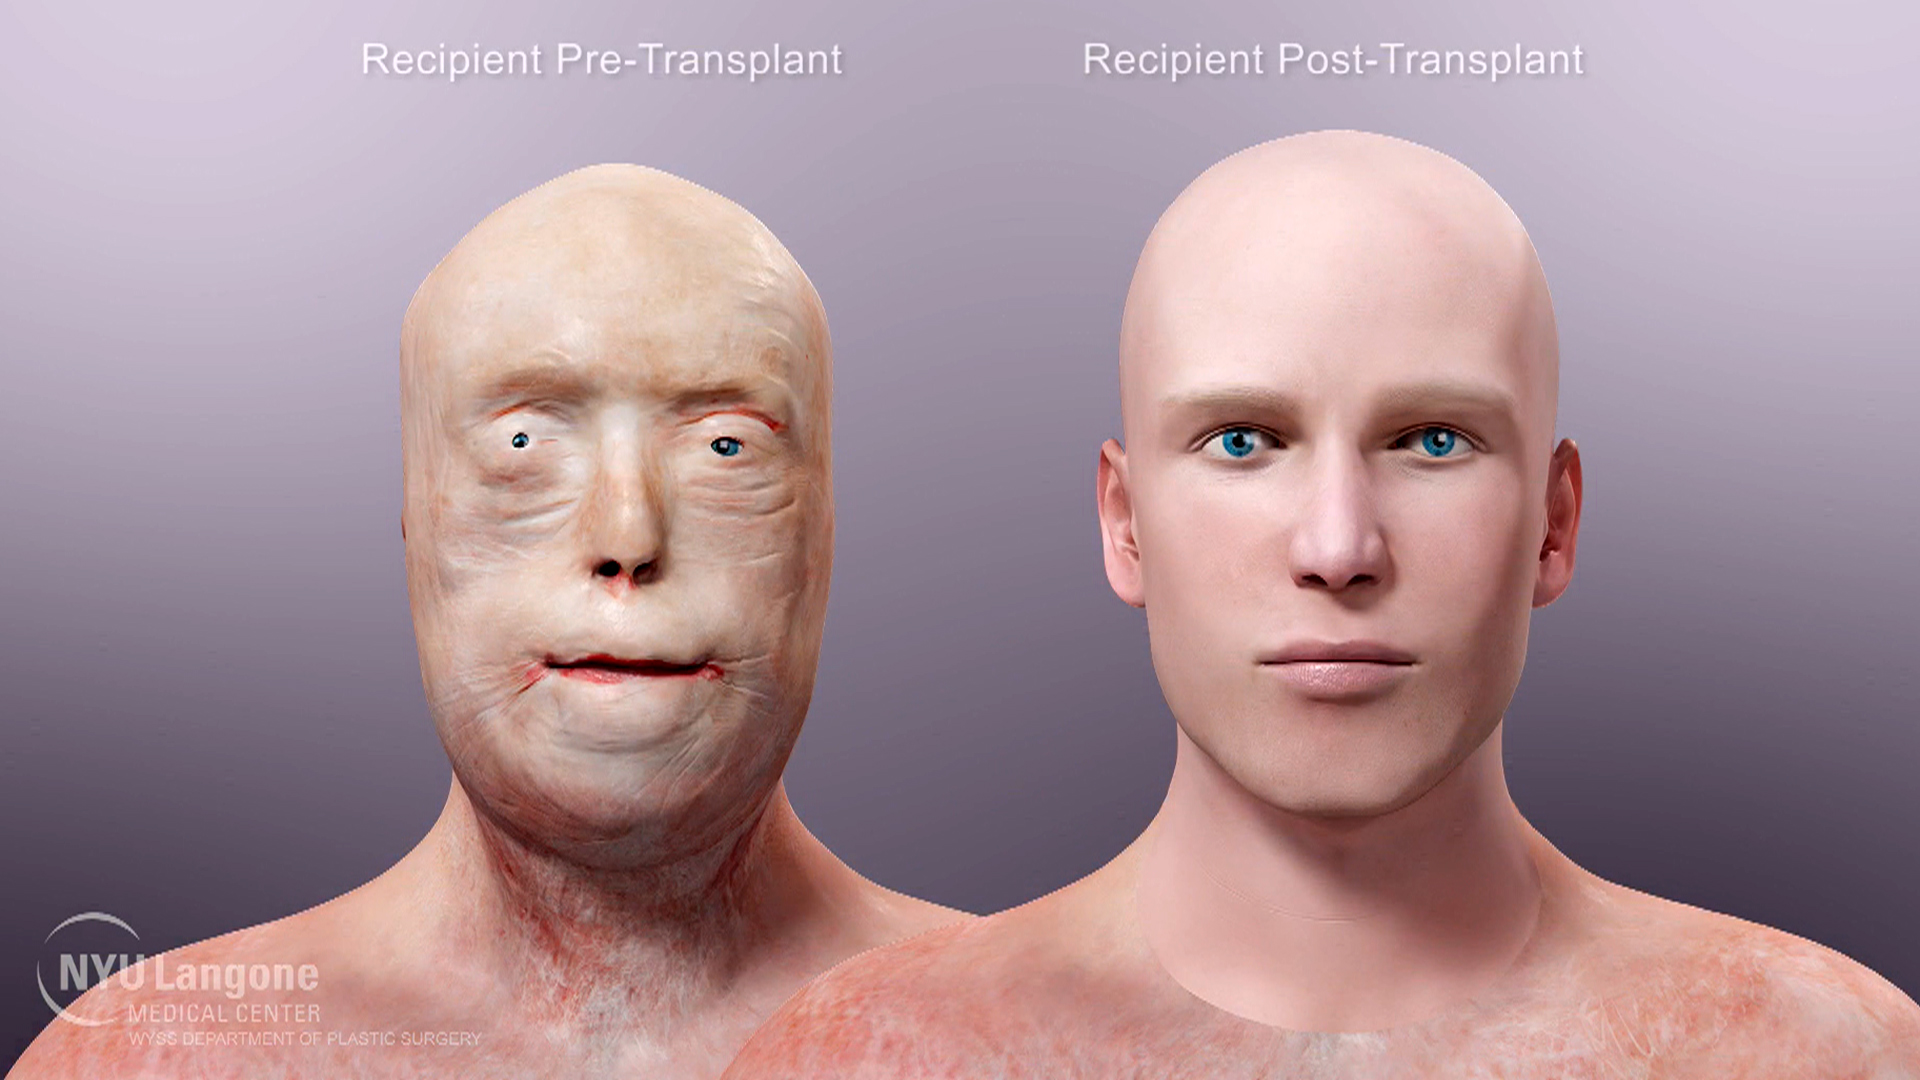 Medical Animation Details Face Transplant Surgery at NYU